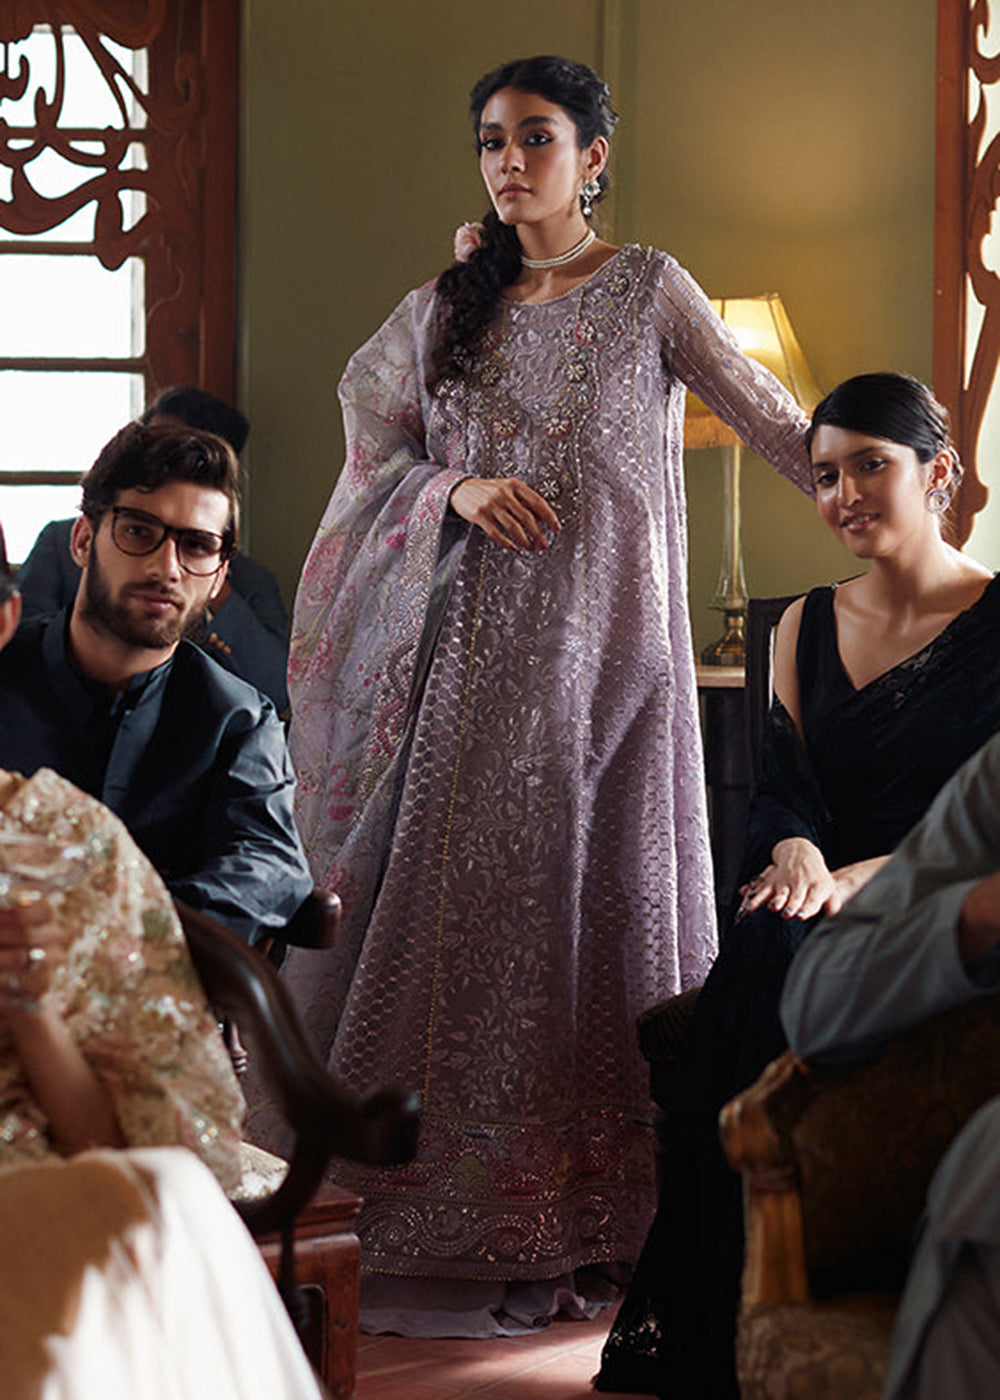 Buy Now Lilac Organza Net Pakistani Suit | Mushq | Qala Kamdaani | Eira Online in USA, UK, Canada & Worldwide at Empress Clothing. 